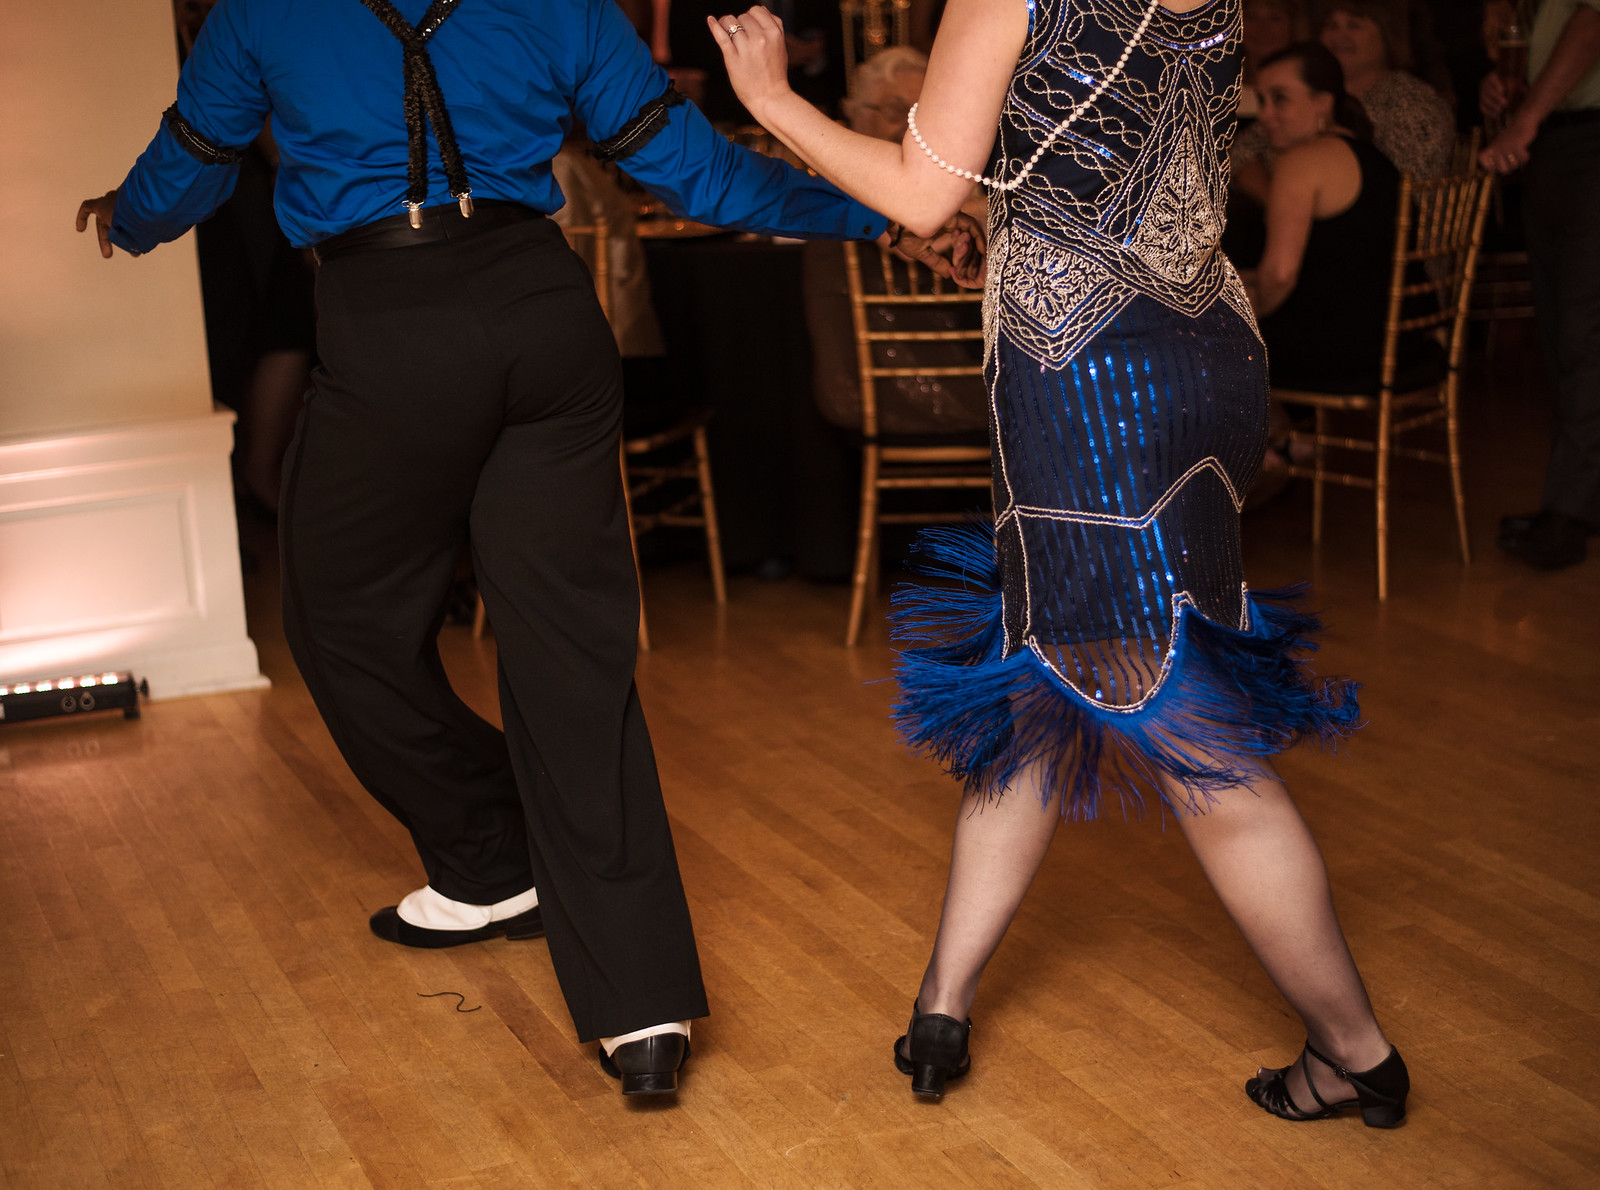 Professional Flapper Dancers Make Appearance on juliettelauraphotography.blogspot.com